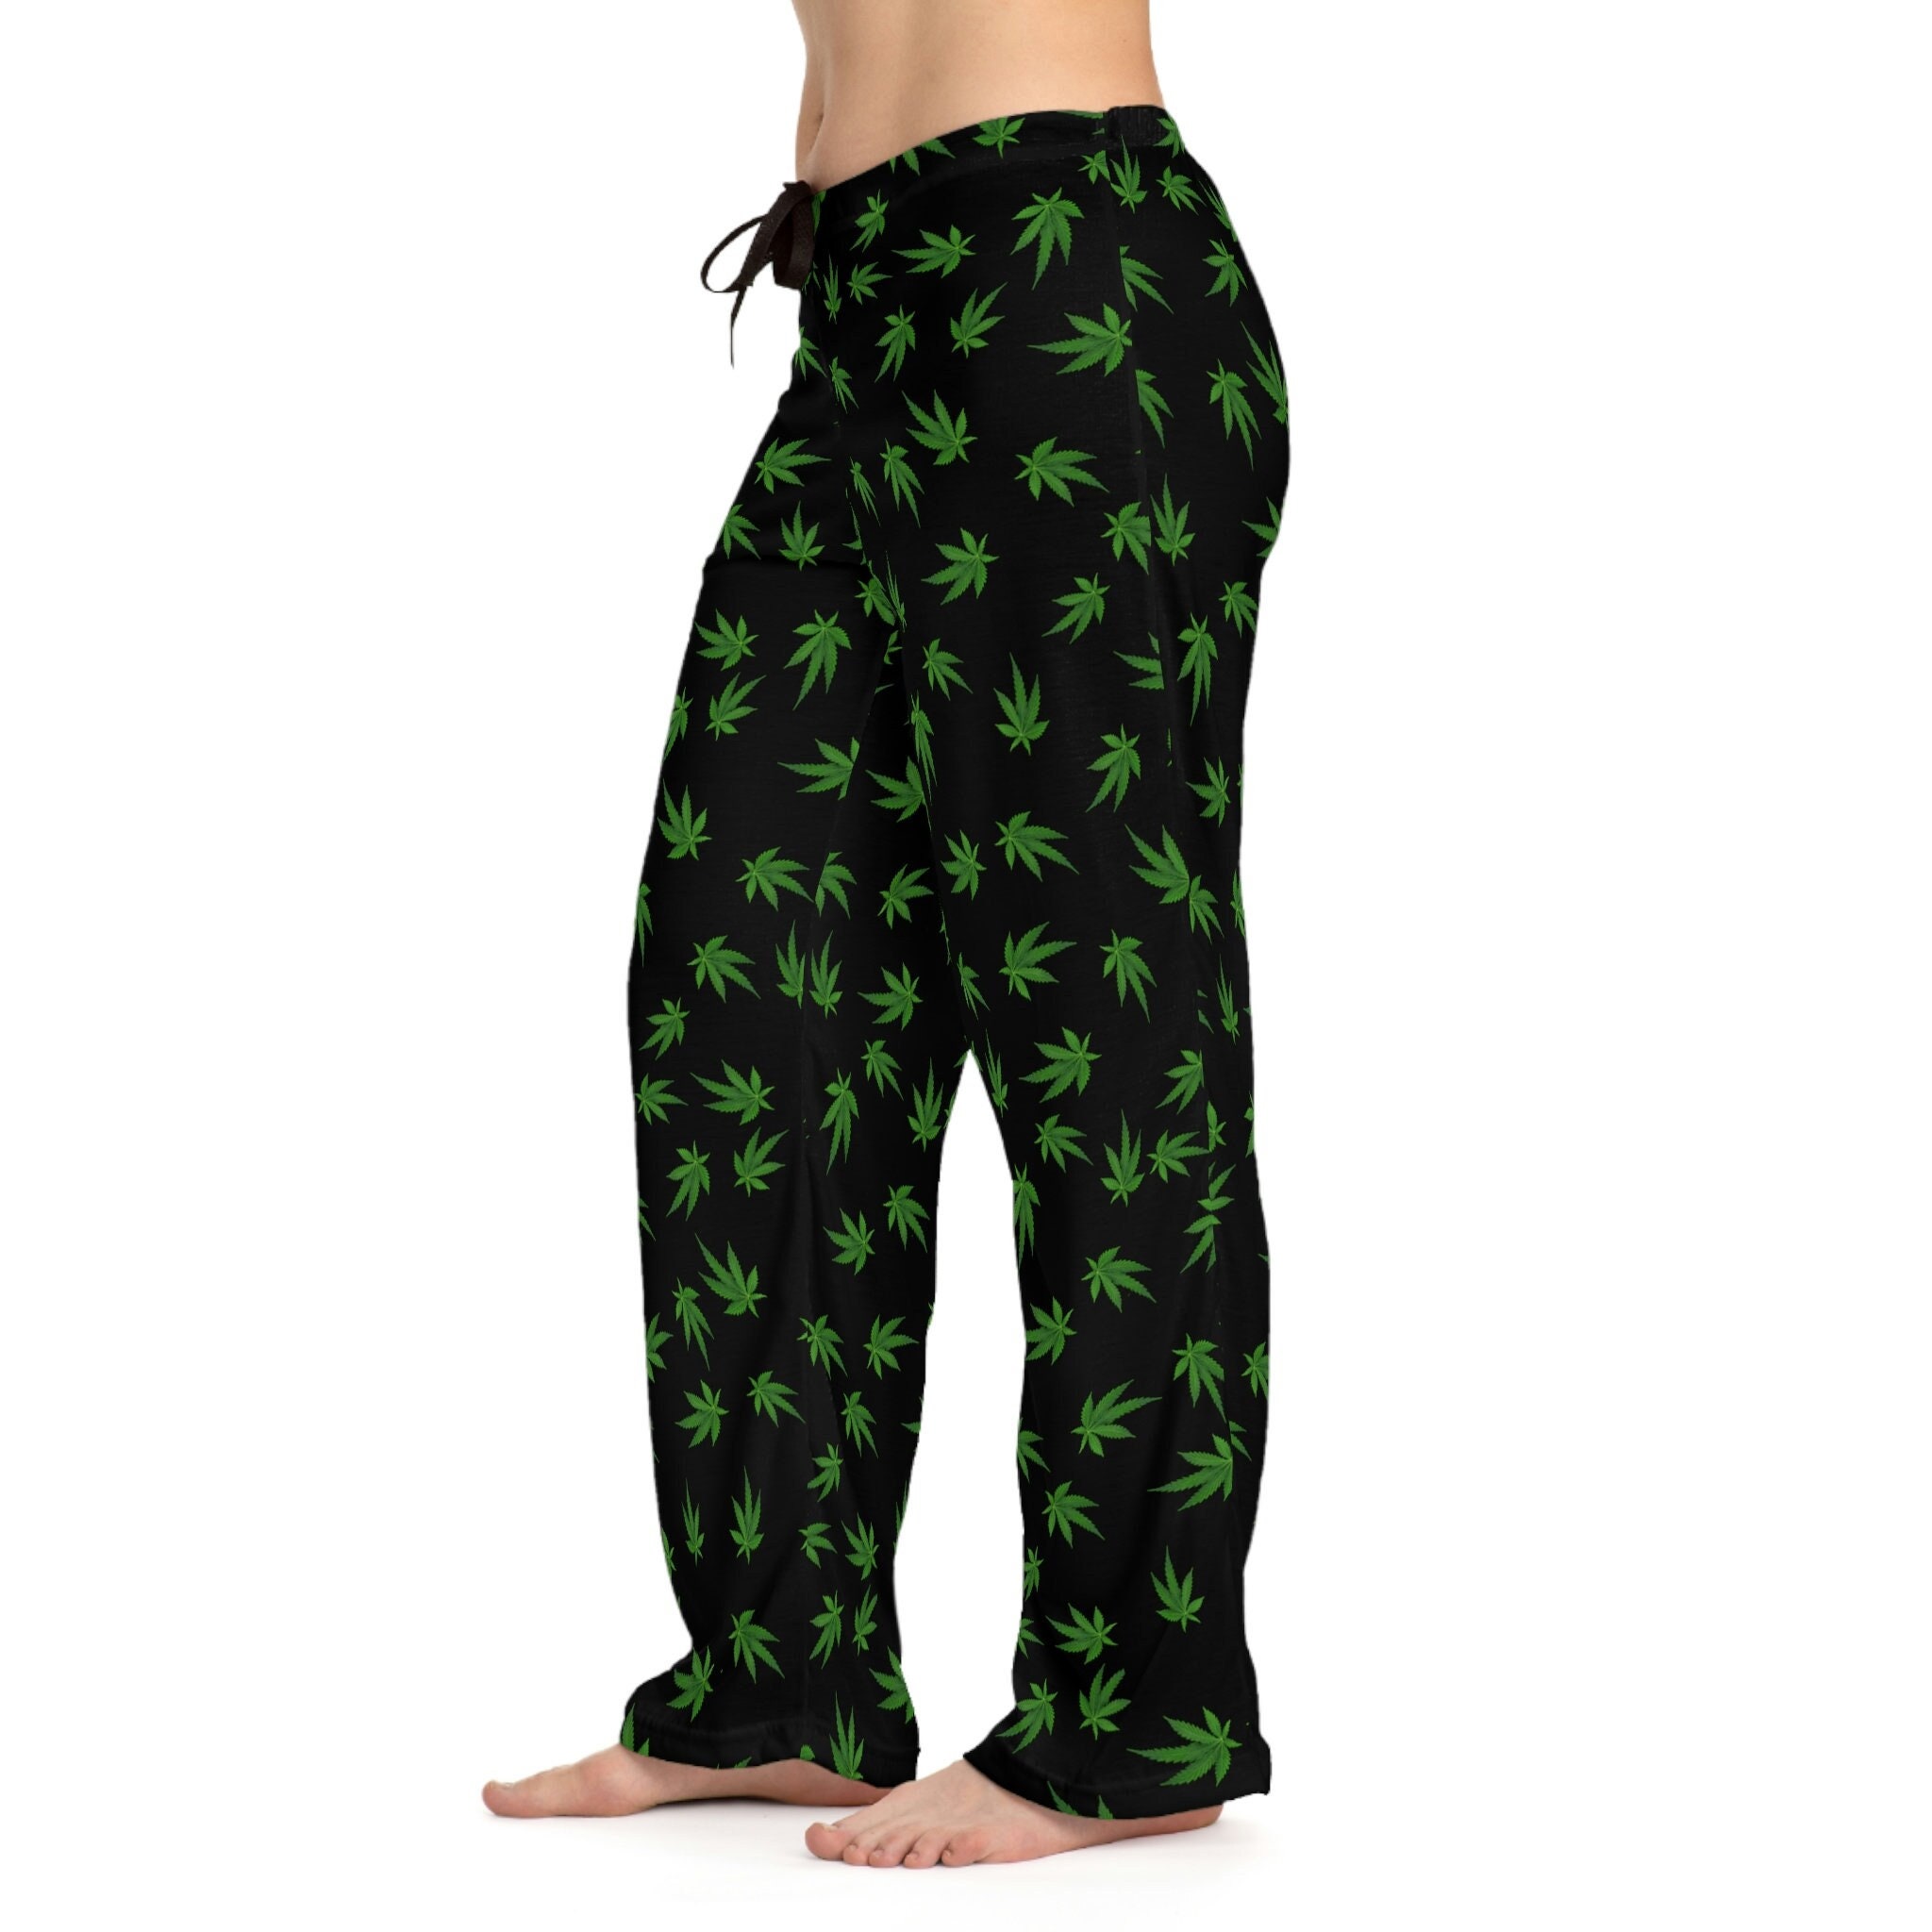 Buy Women's Marijuana Leaf Pajama Pants/ Cute Women's Weed Pajamas